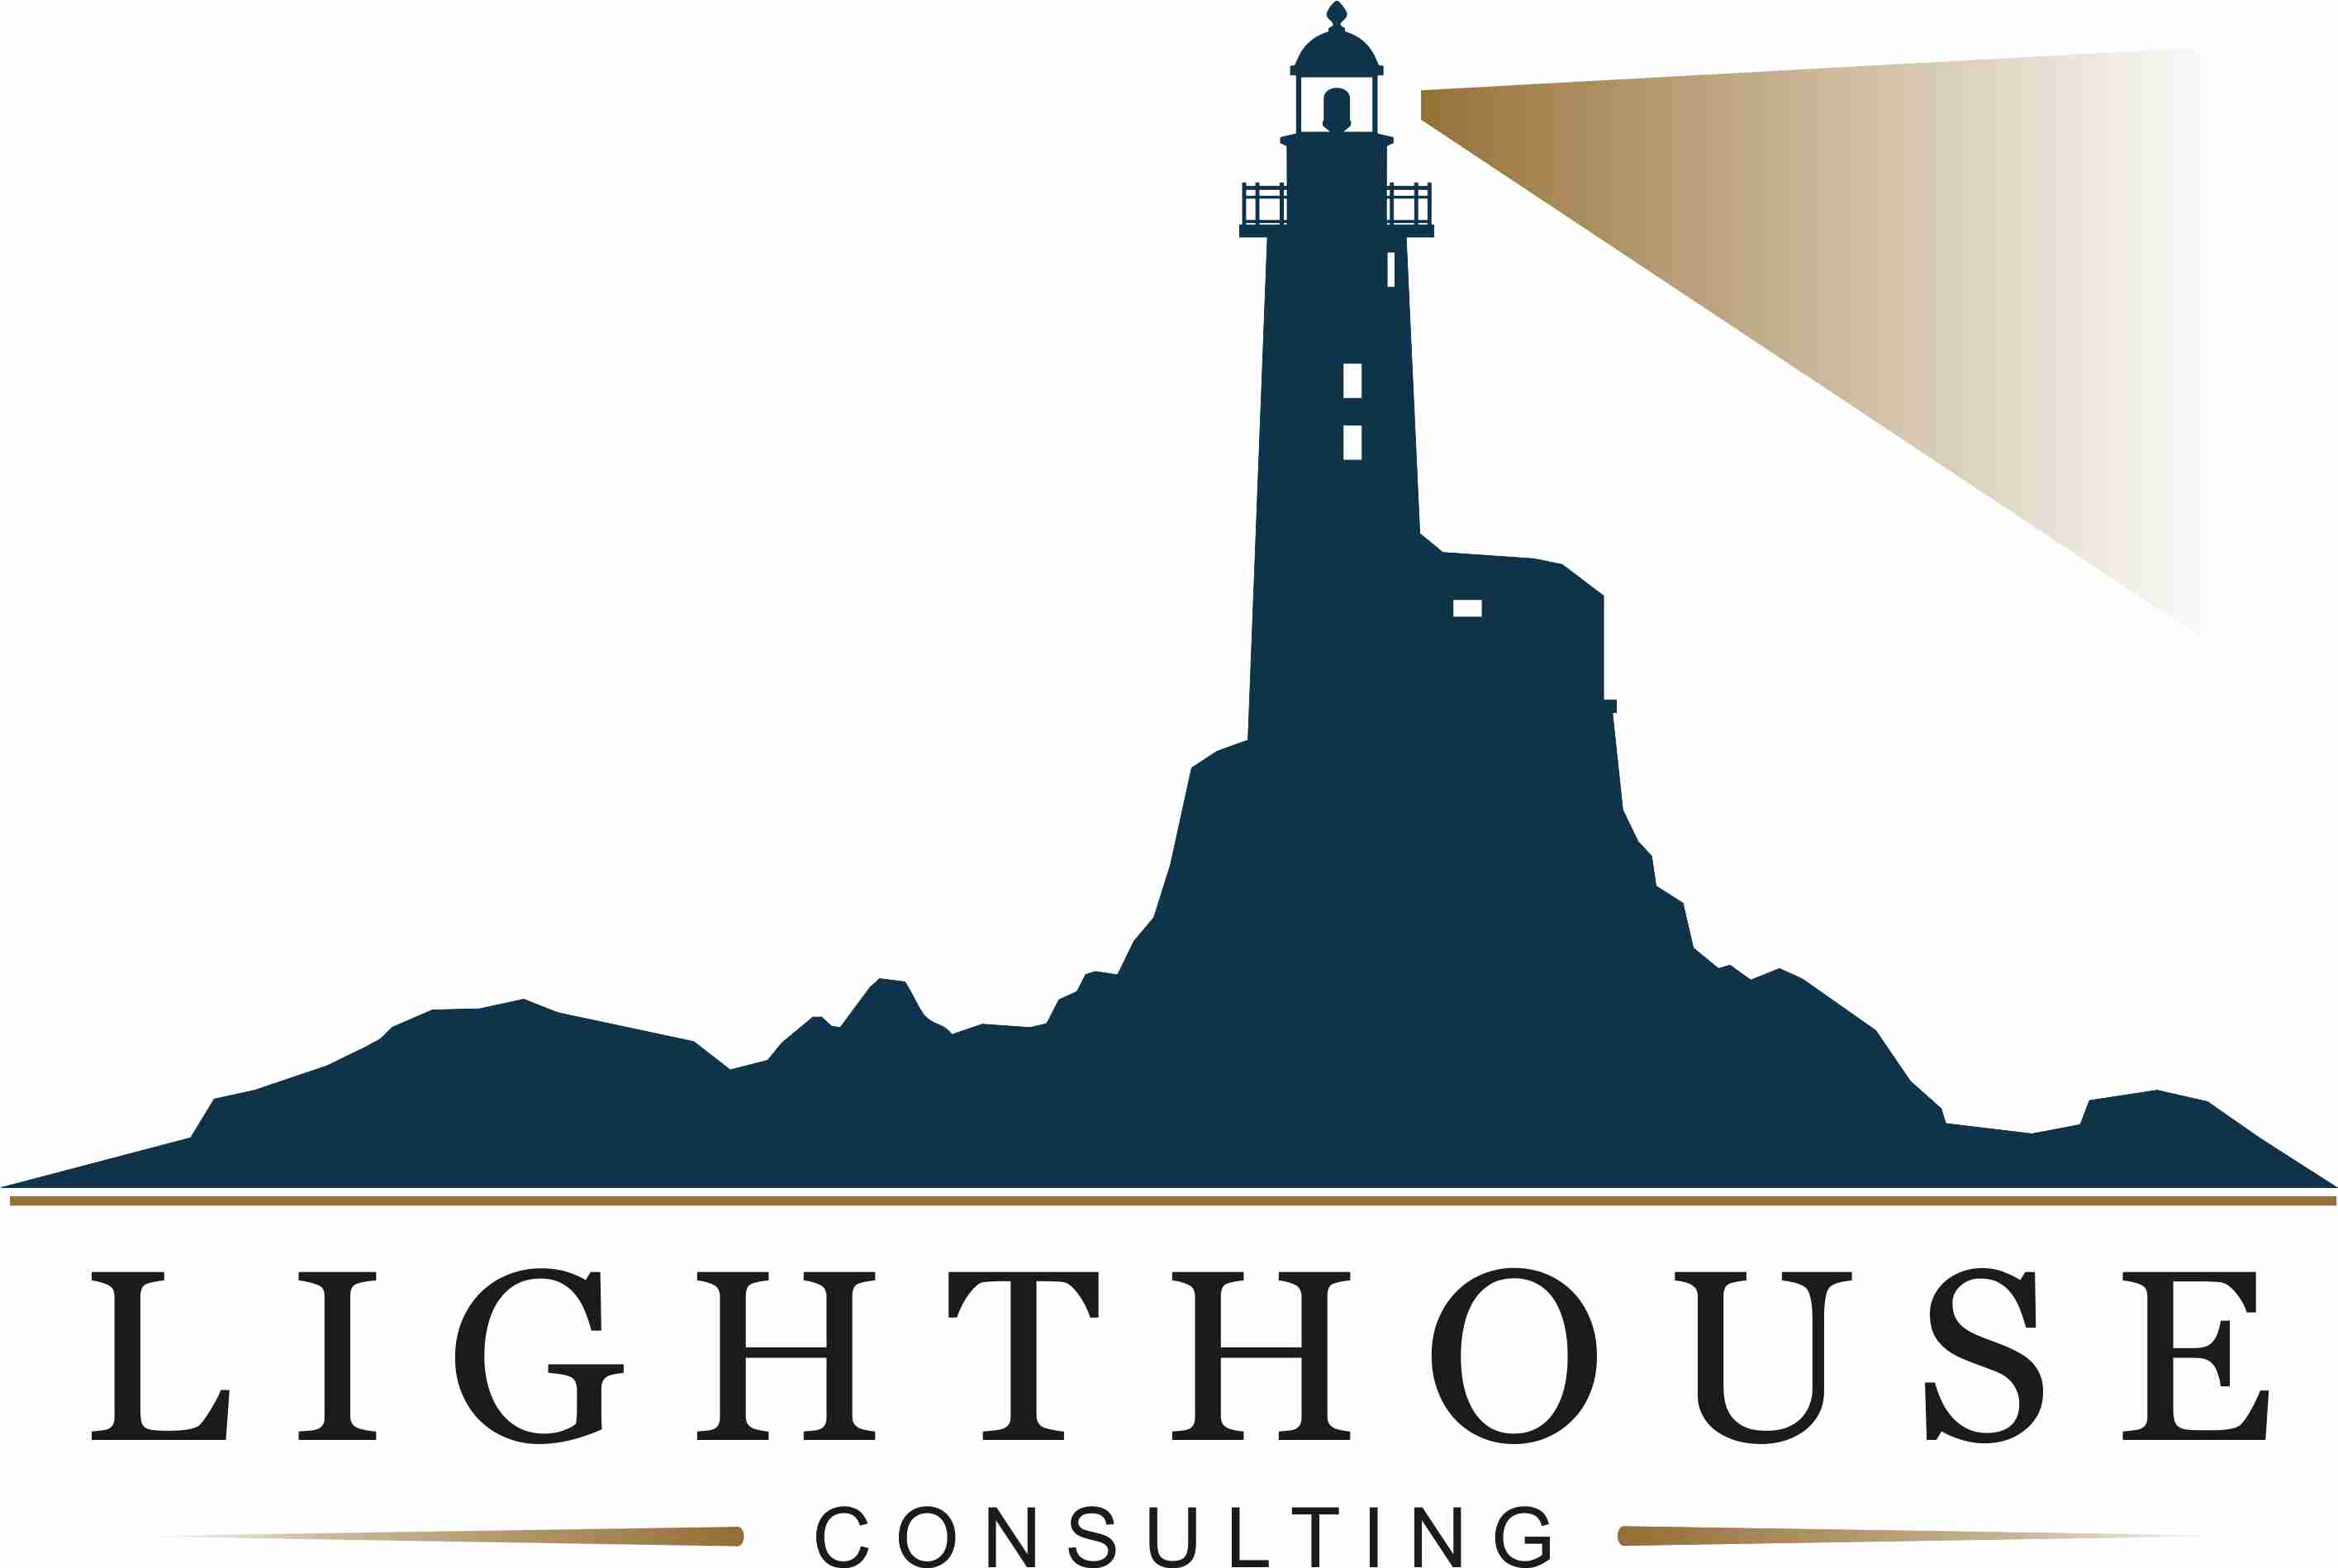 Lighthouse consulting Ukraine